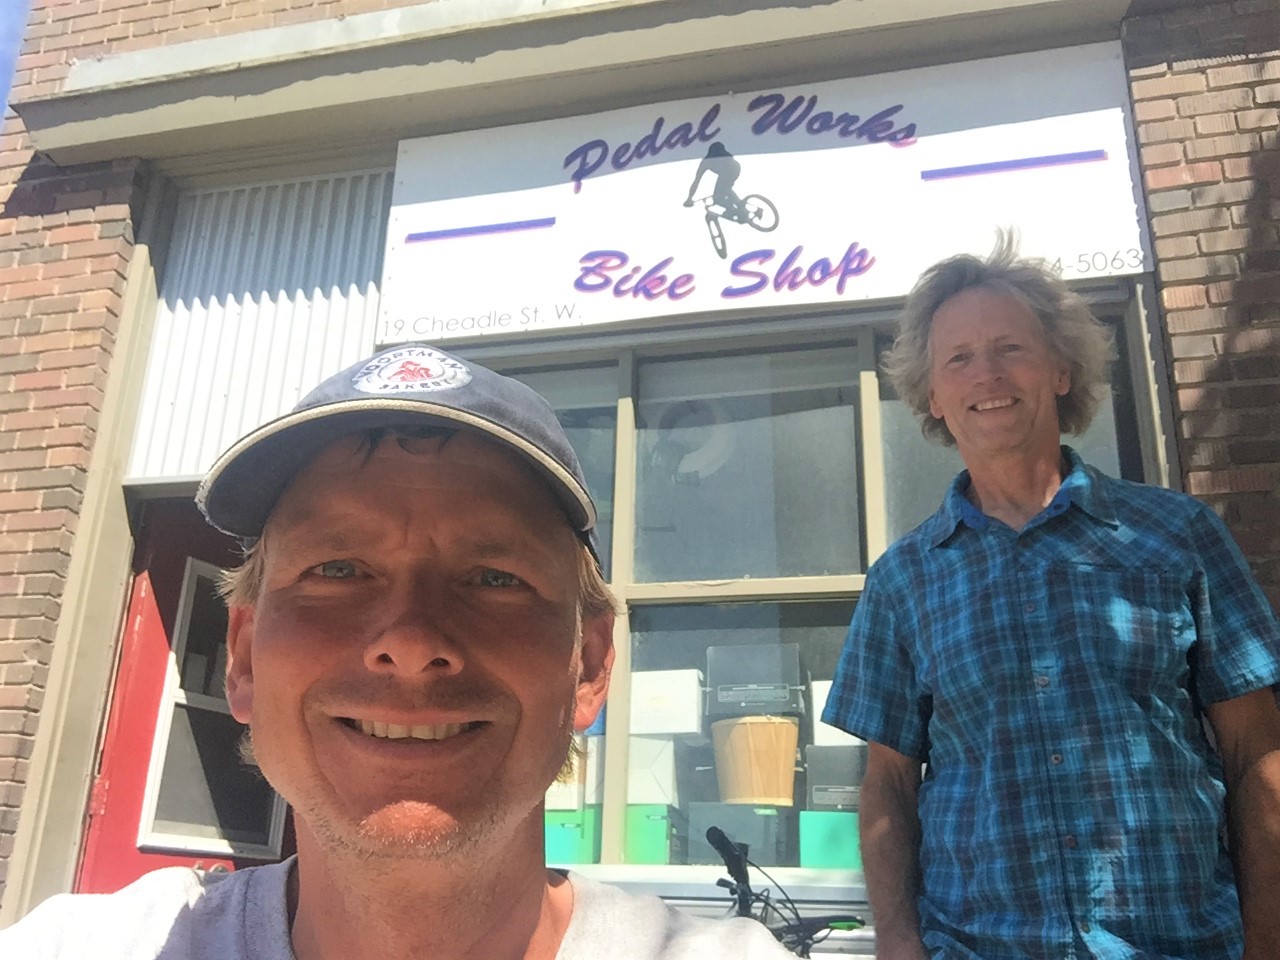 Grant at Pedal Works Bike Shop